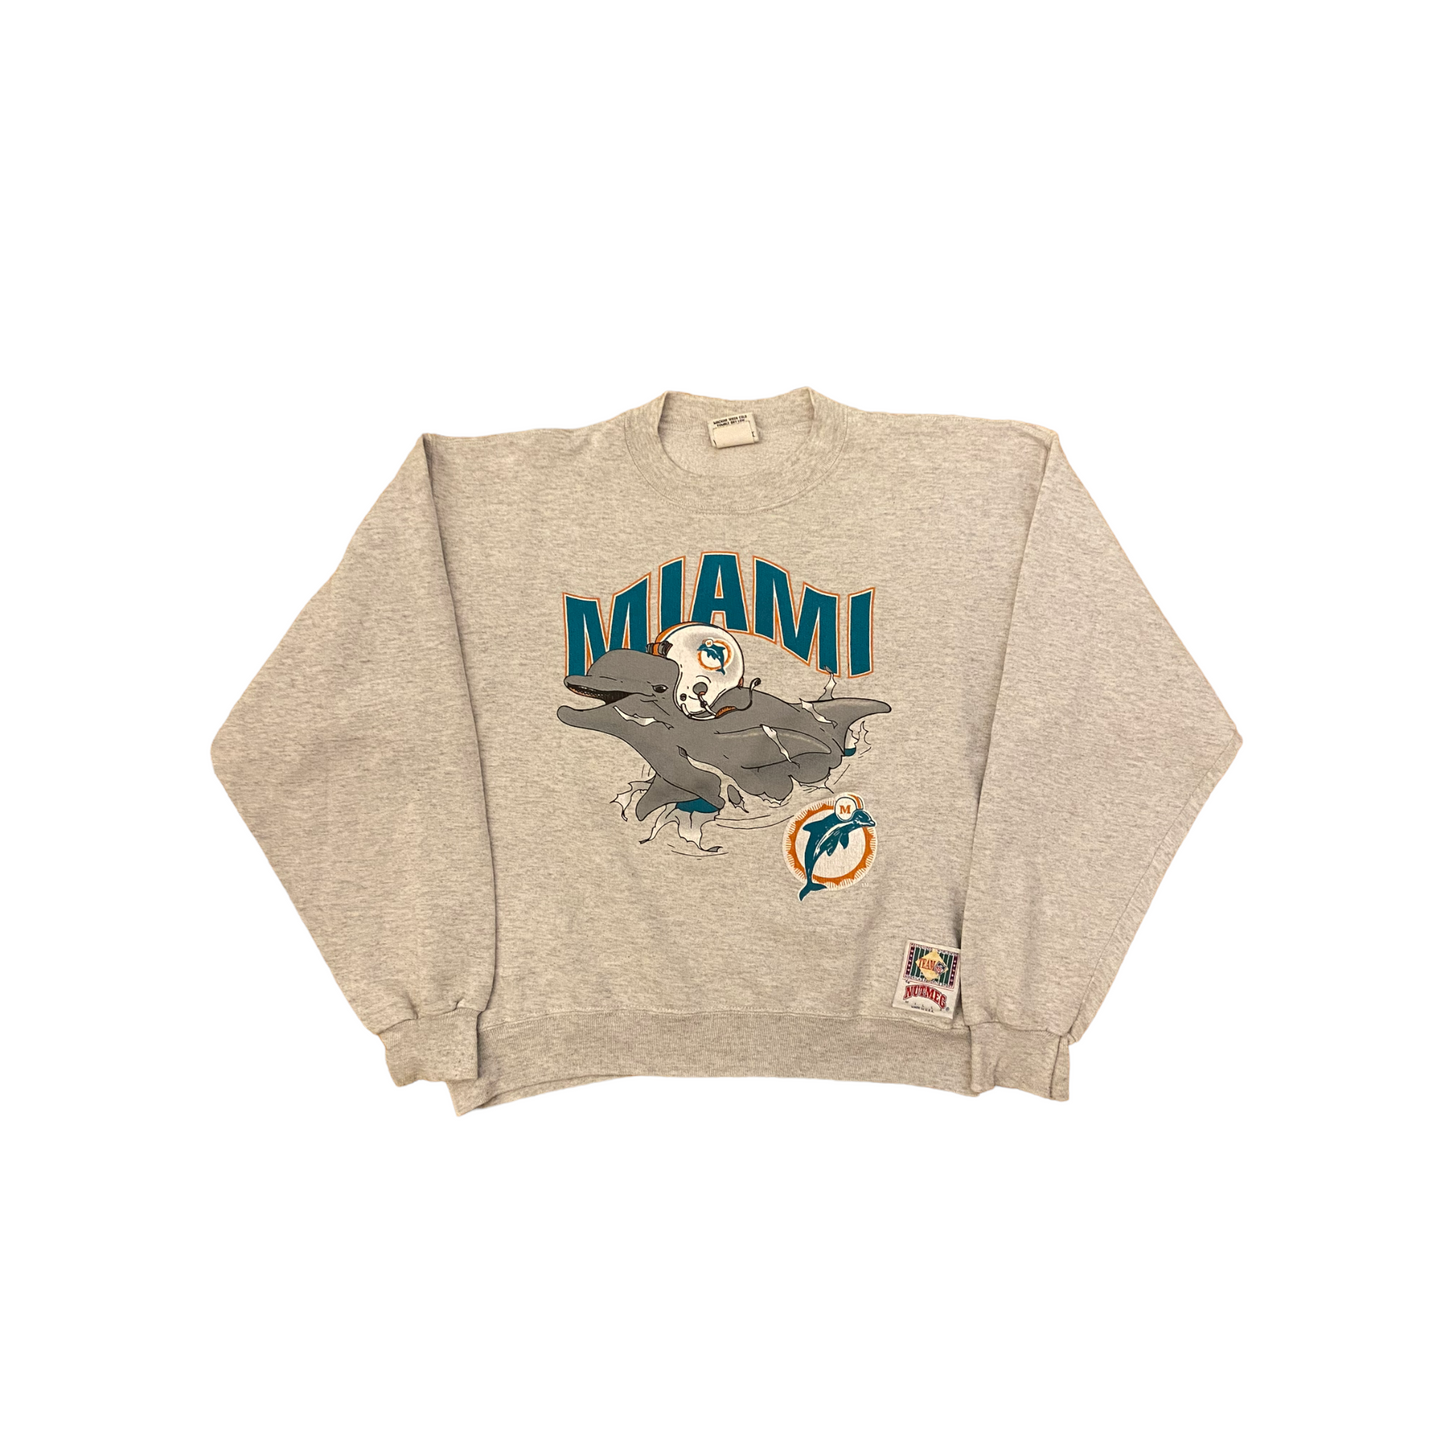 Miami Dolphins 1993 Sweatshirt S